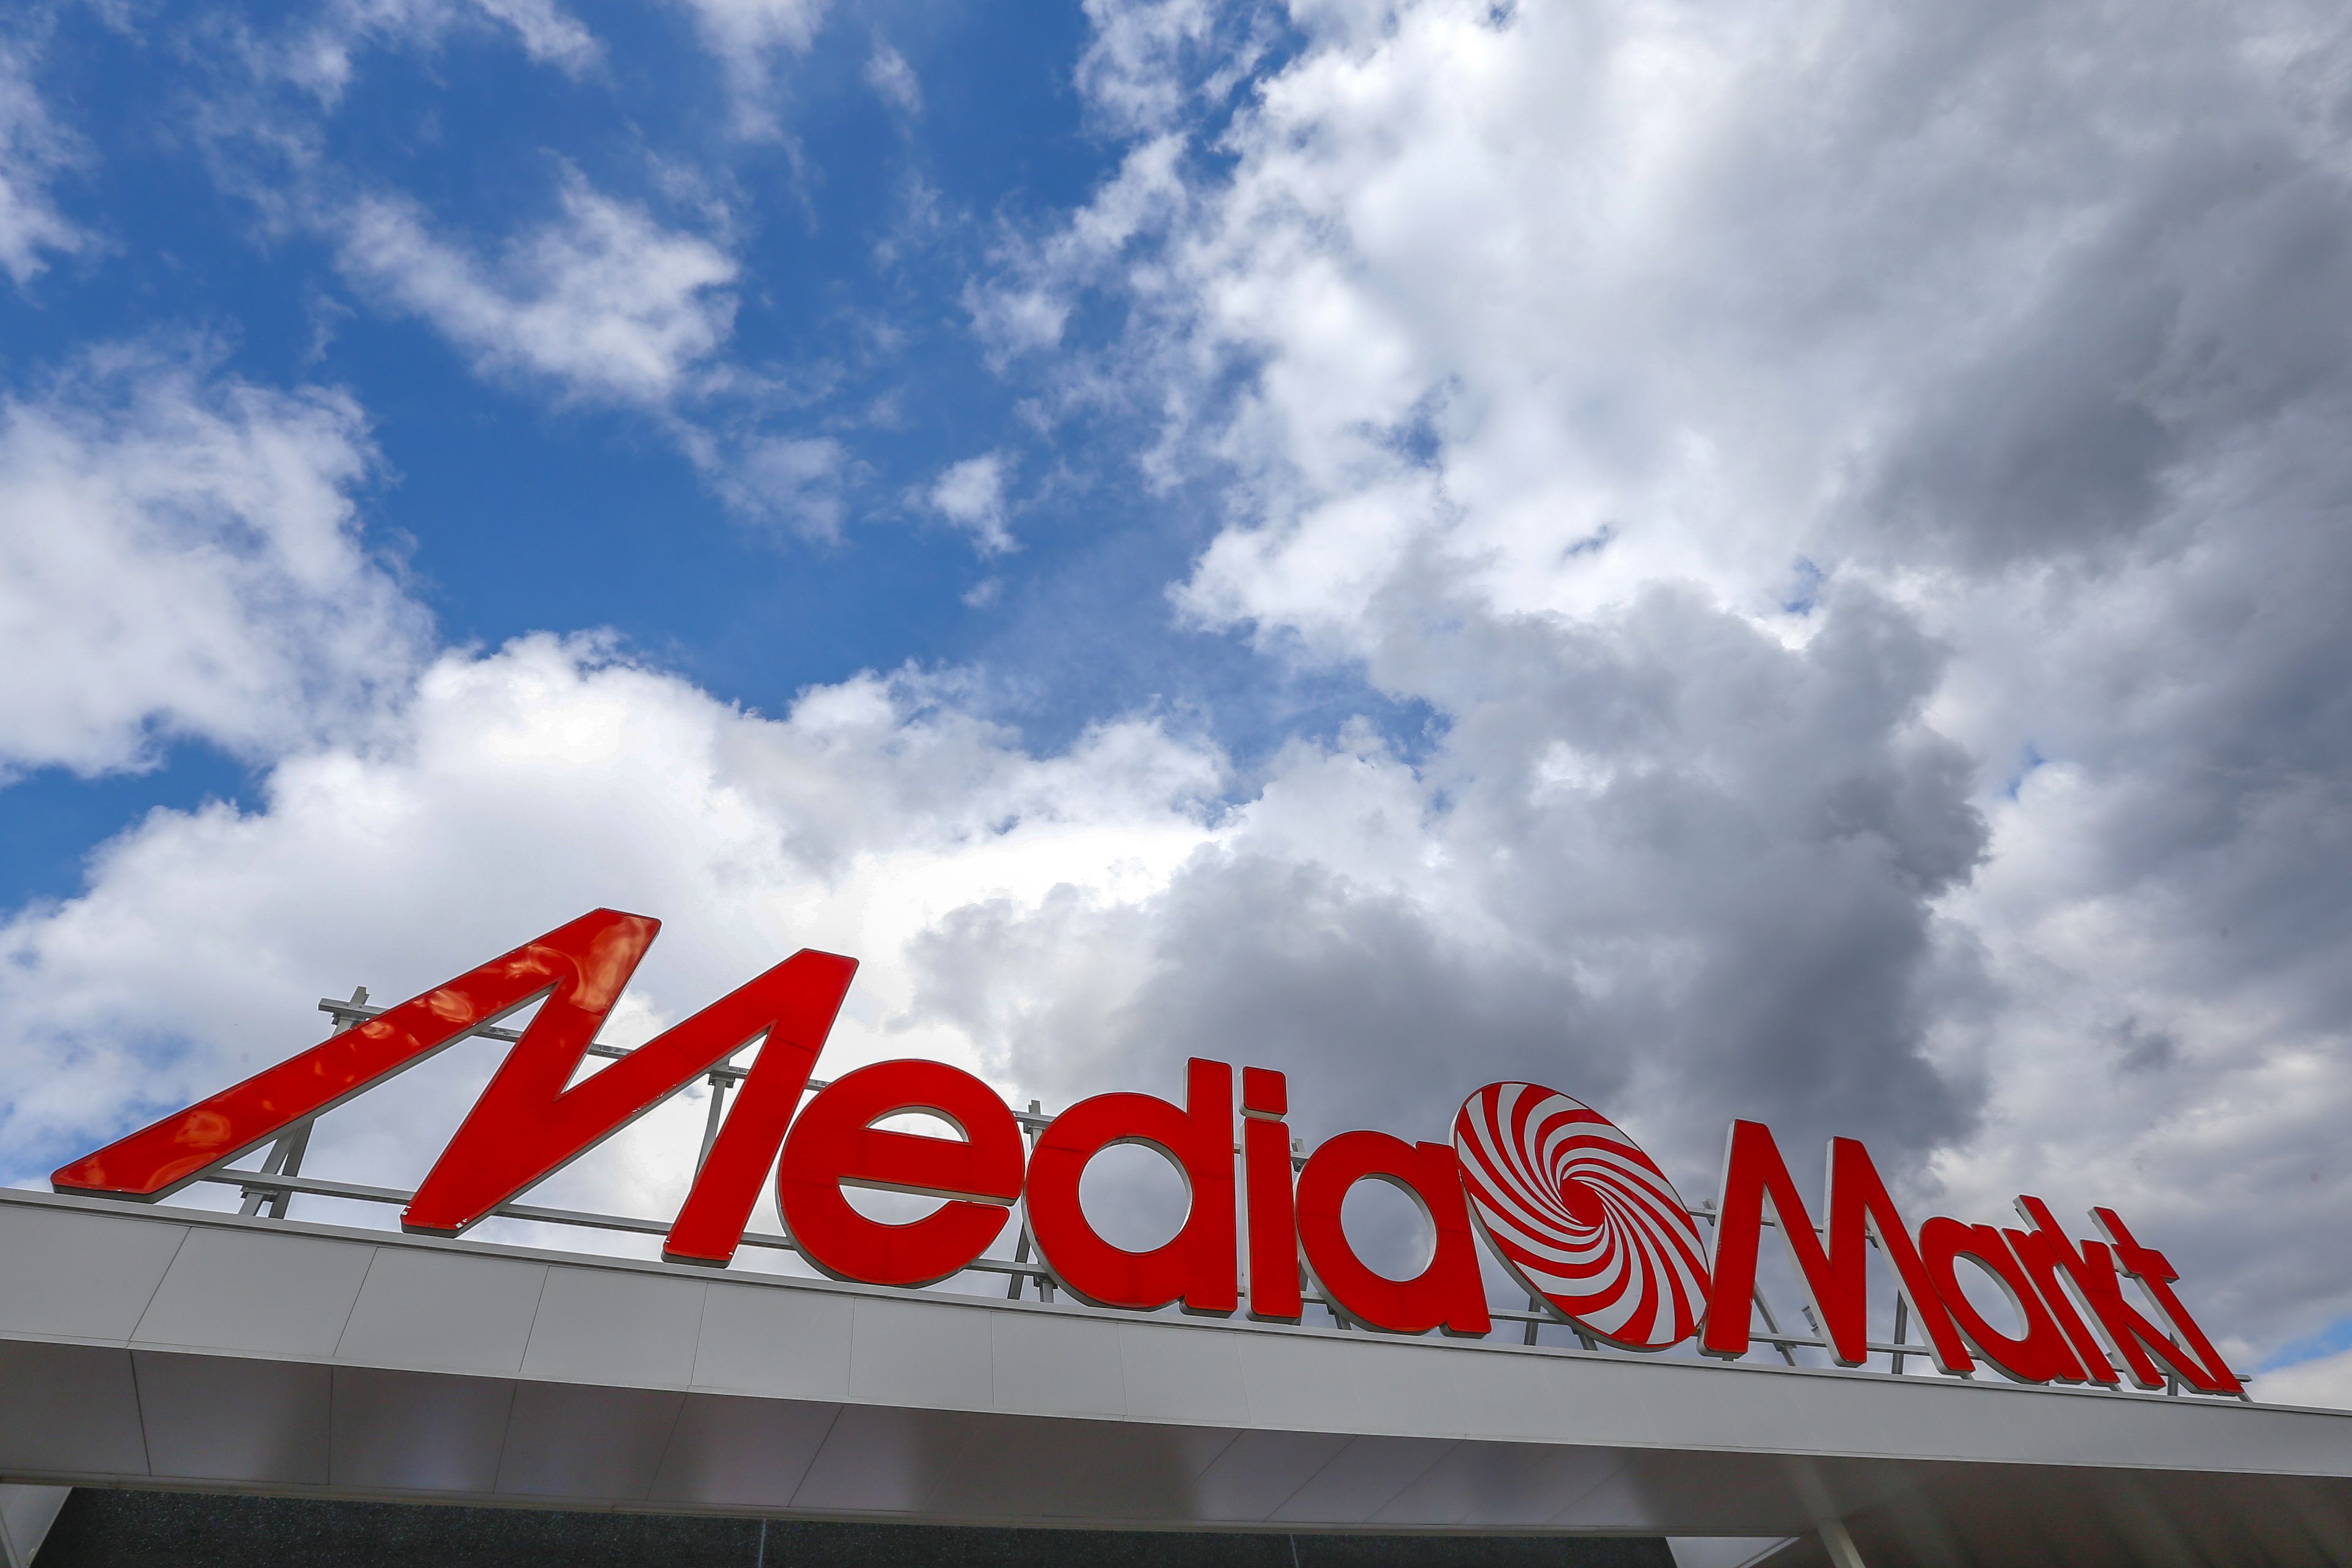 MediaMarkt España